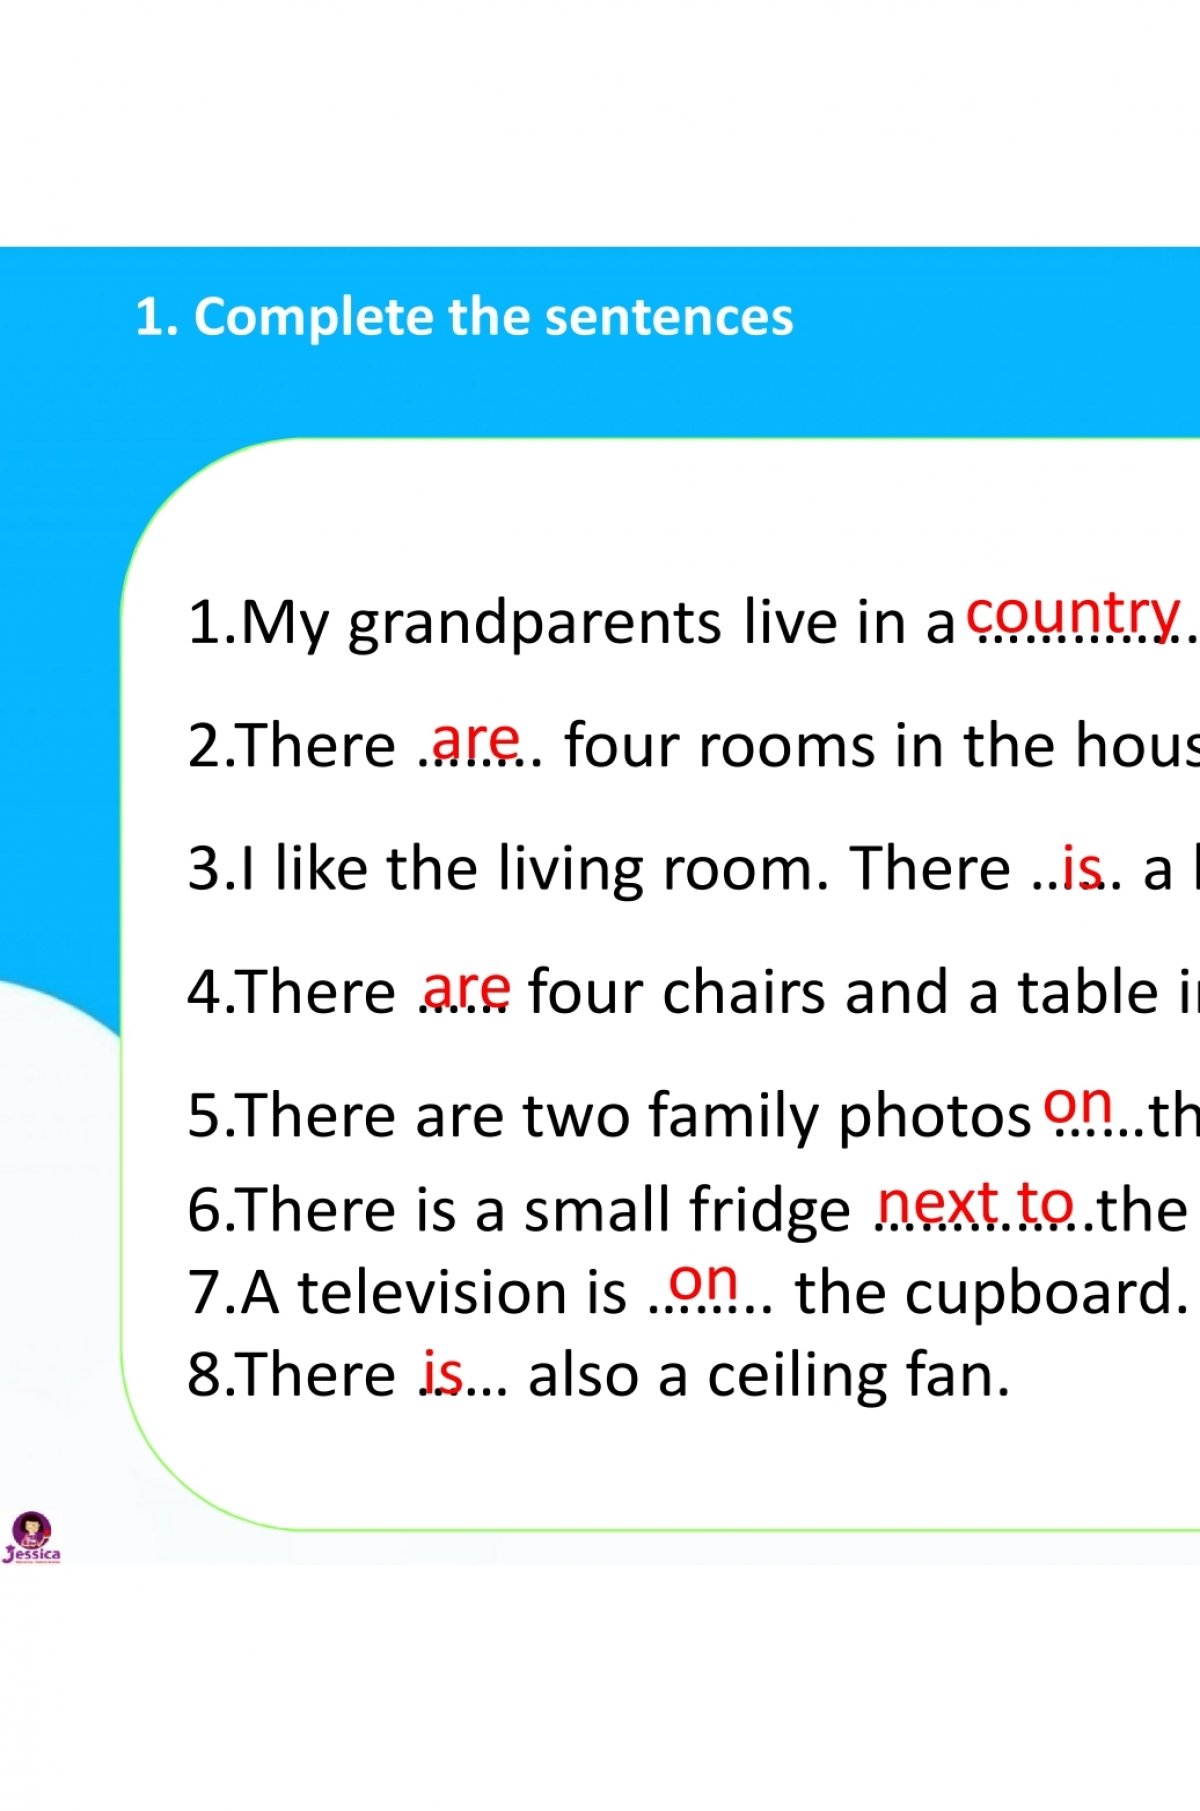 homework 216 complete the sentences